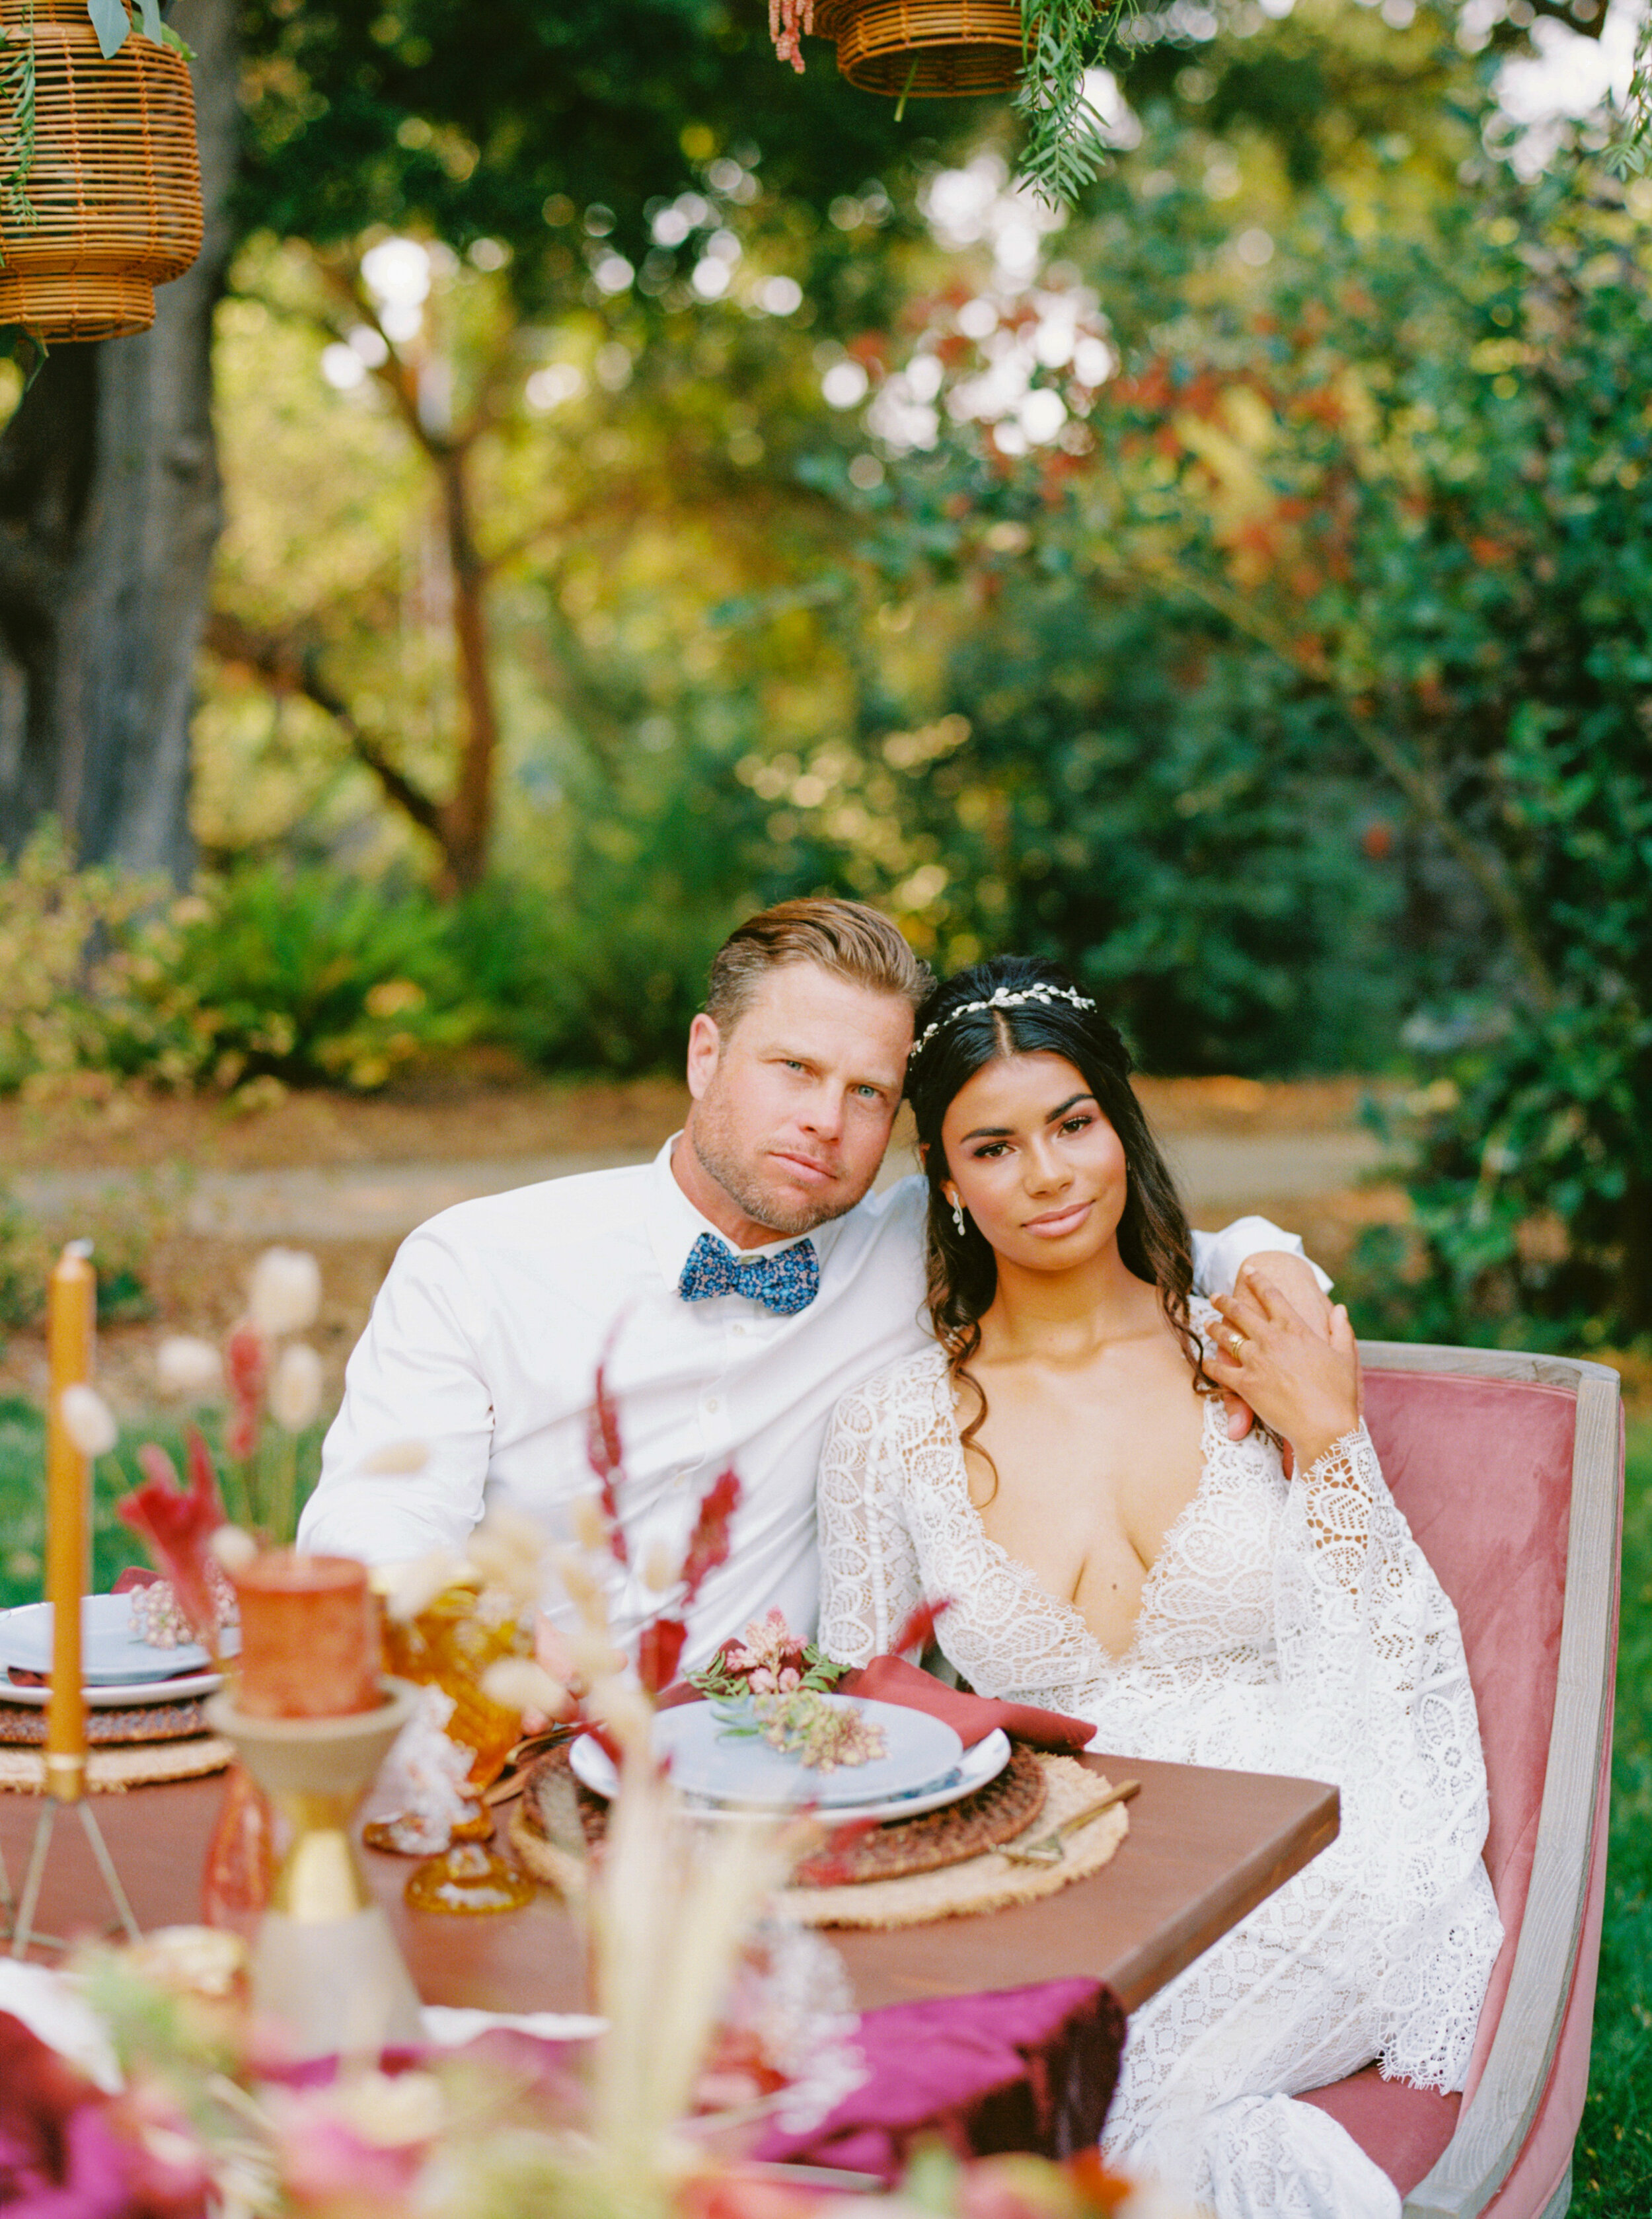 Sarahi Hadden - An Earthy Summer Boho Inspired Wedding with Sunset Hues at Gardener Ranch-48.jpg